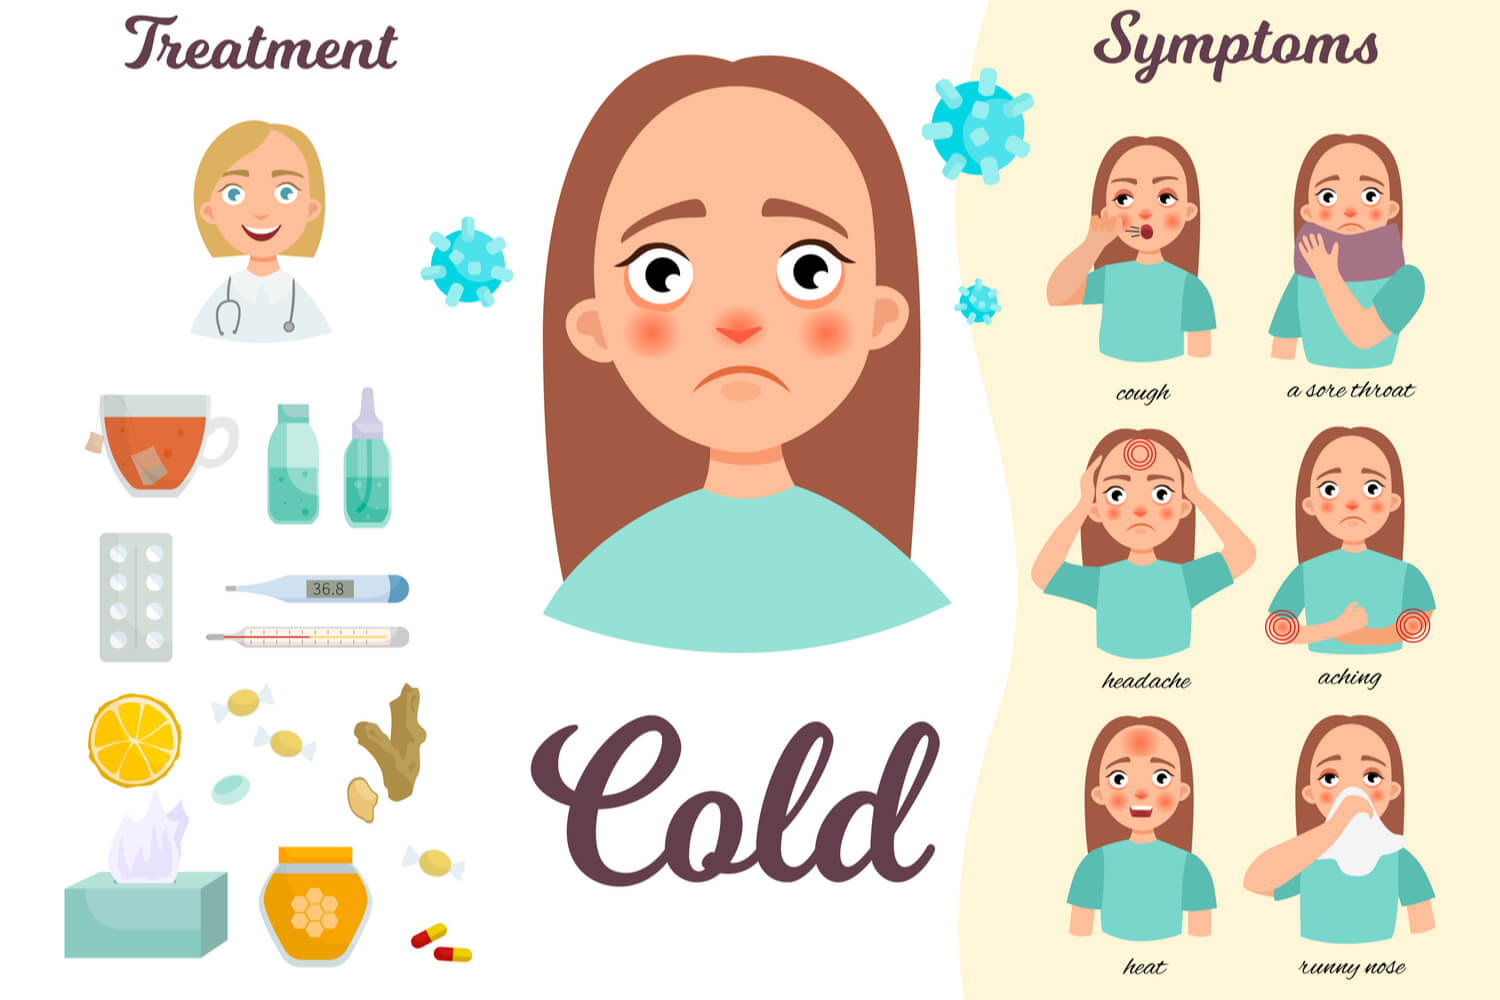 Symptoms of a Cold in Kids